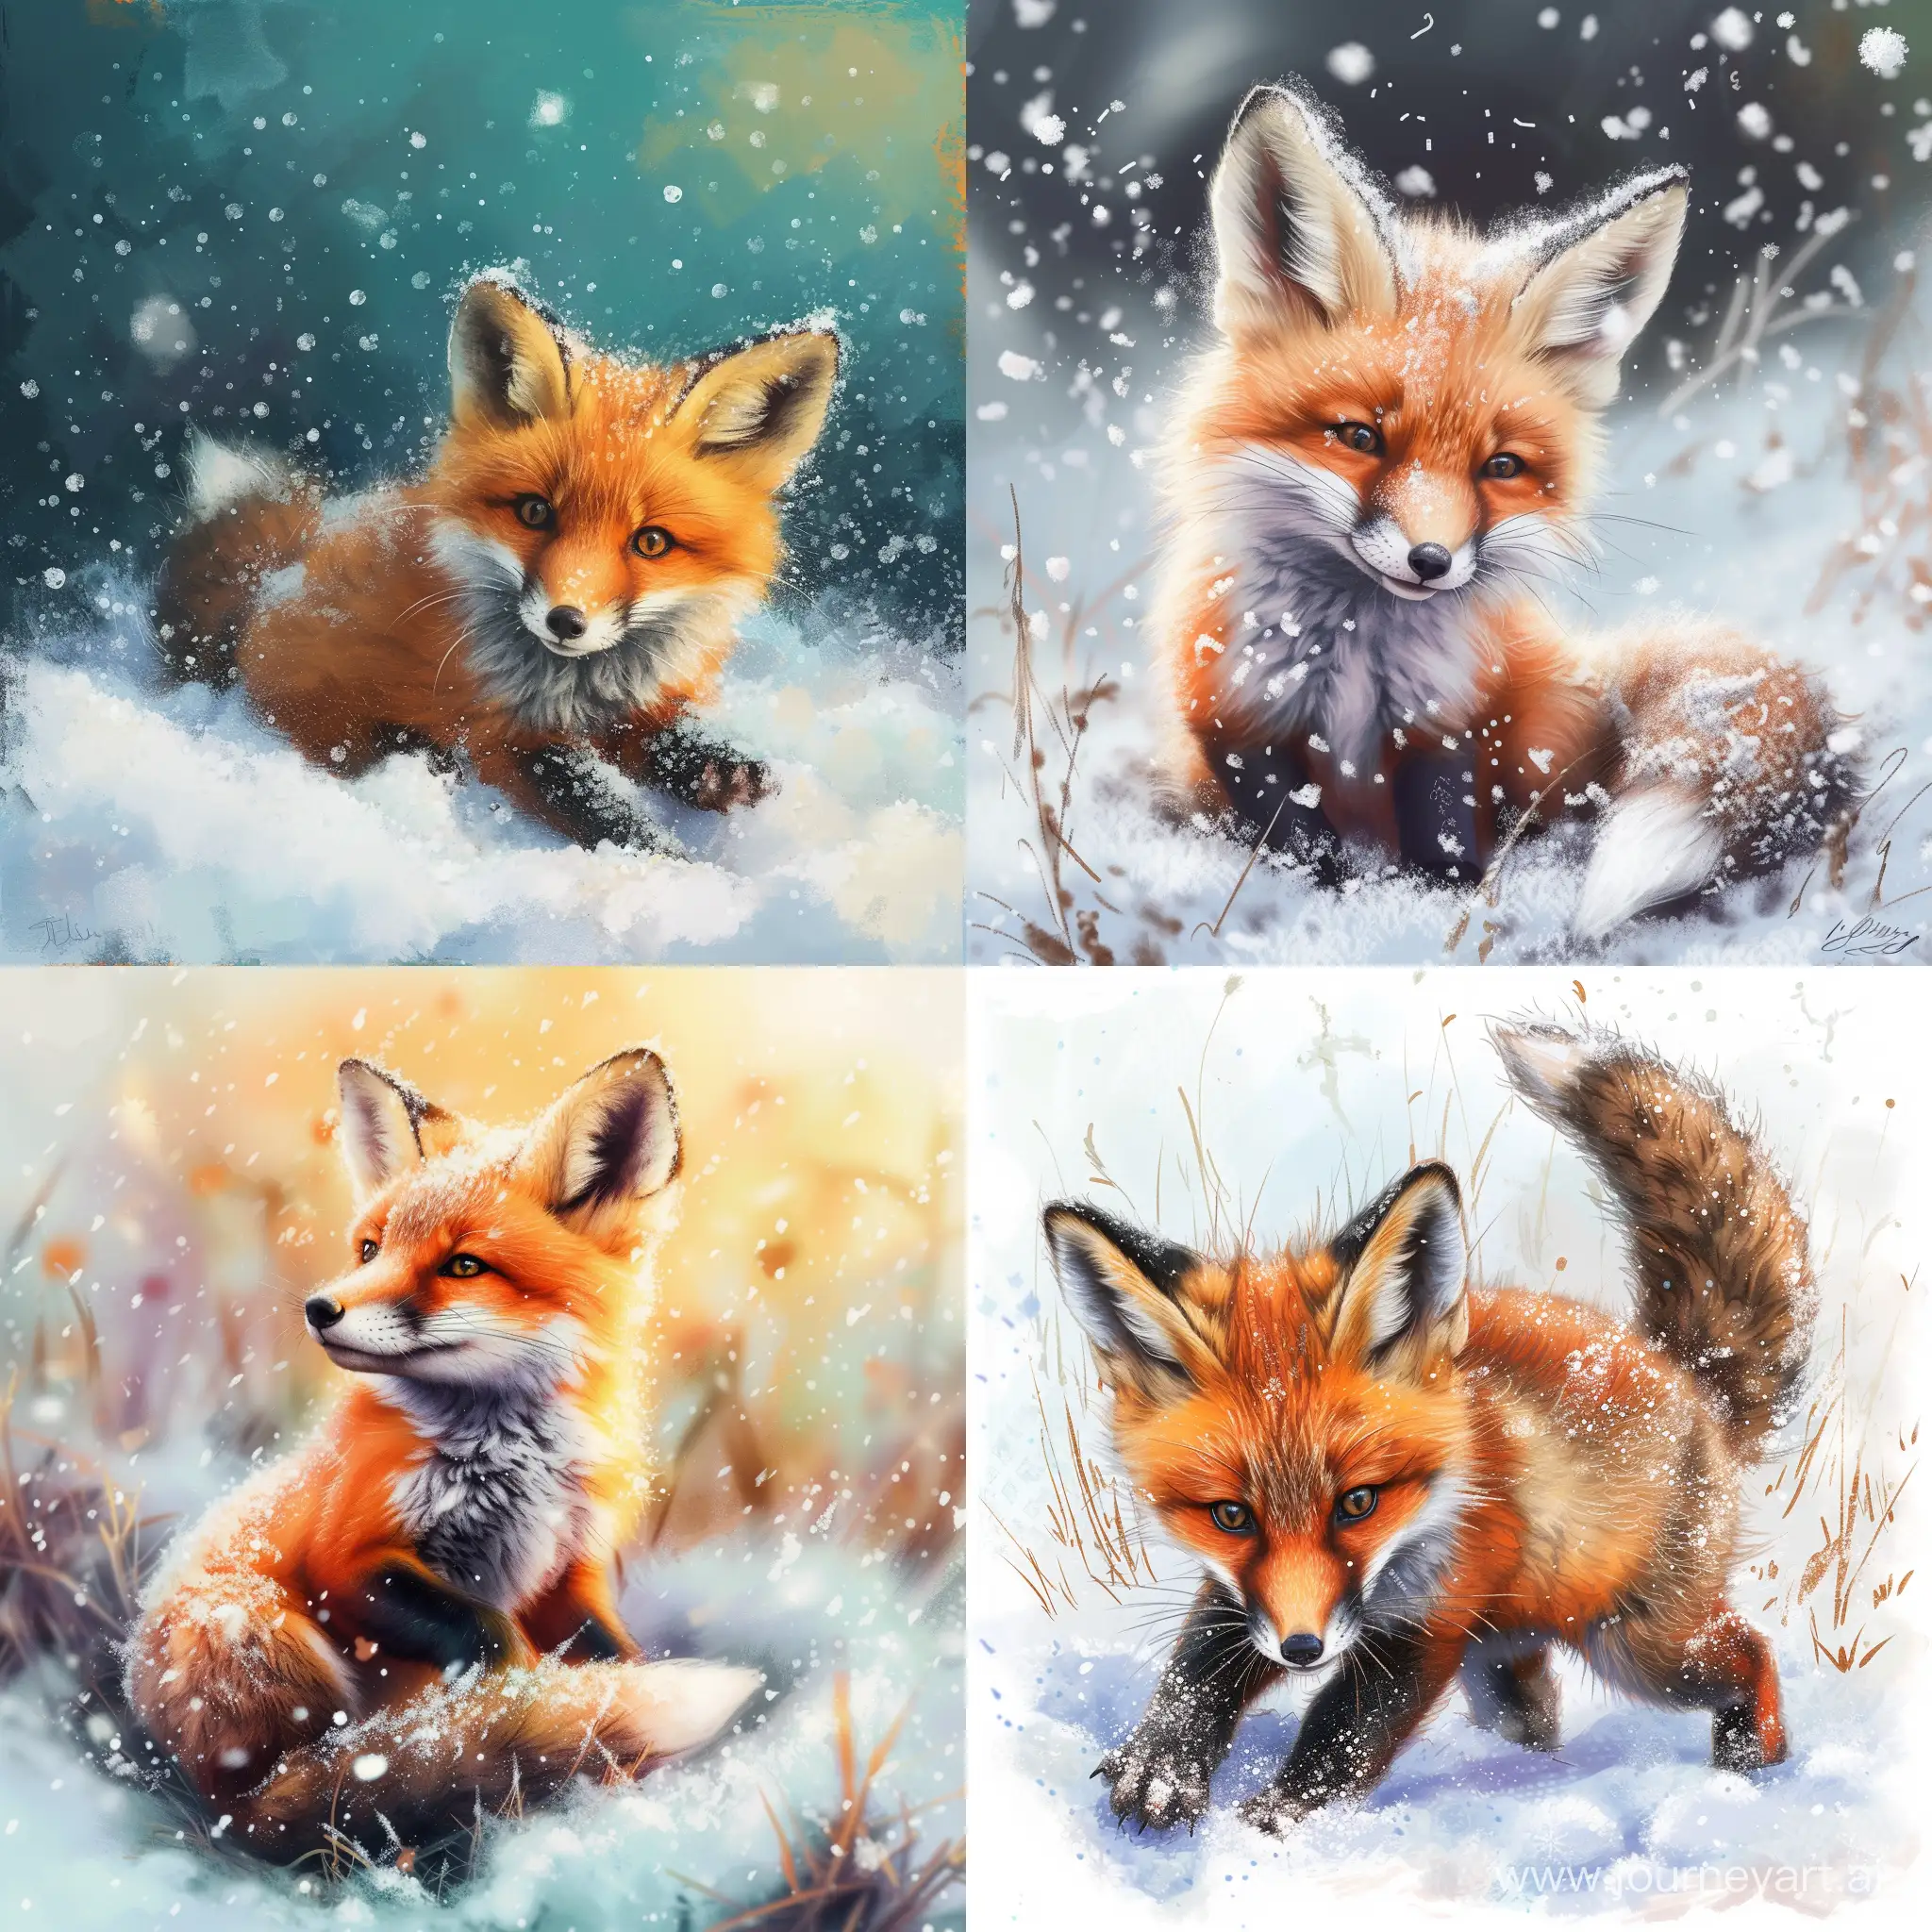 Playful-Little-Fox-Cub-Enjoying-Vibrant-Snowy-Adventure